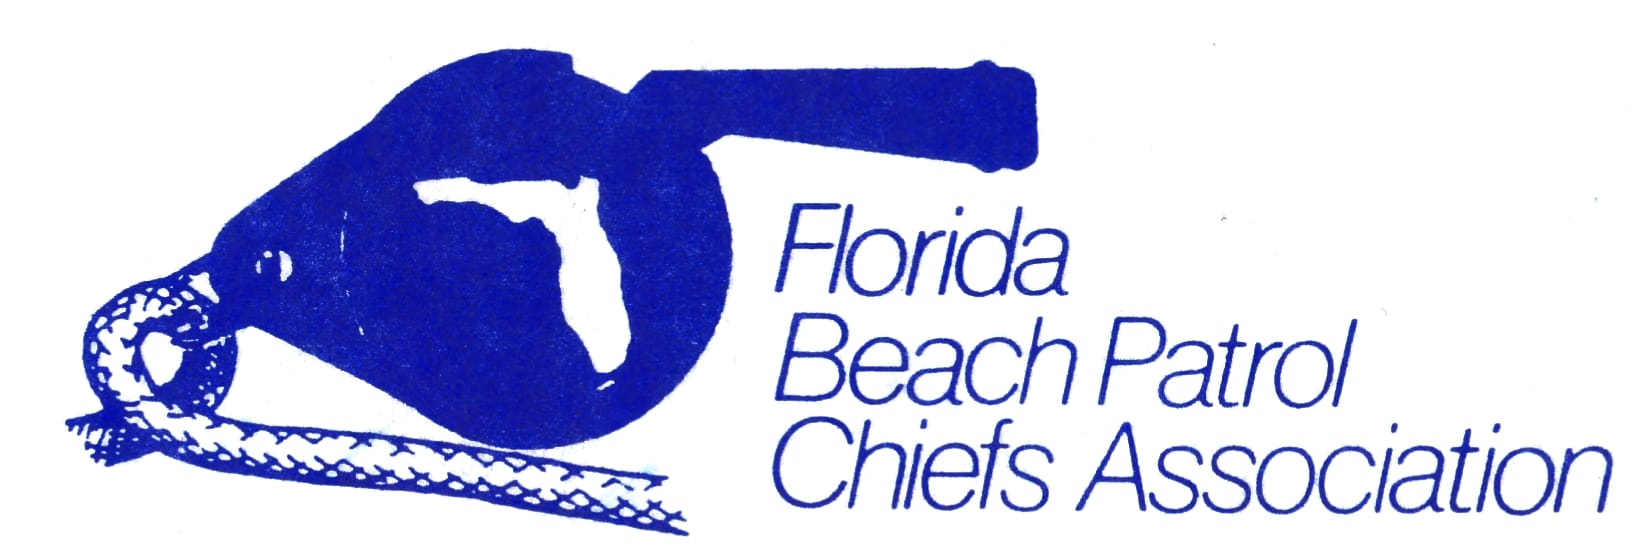 florida beach patrol chiefs association logo